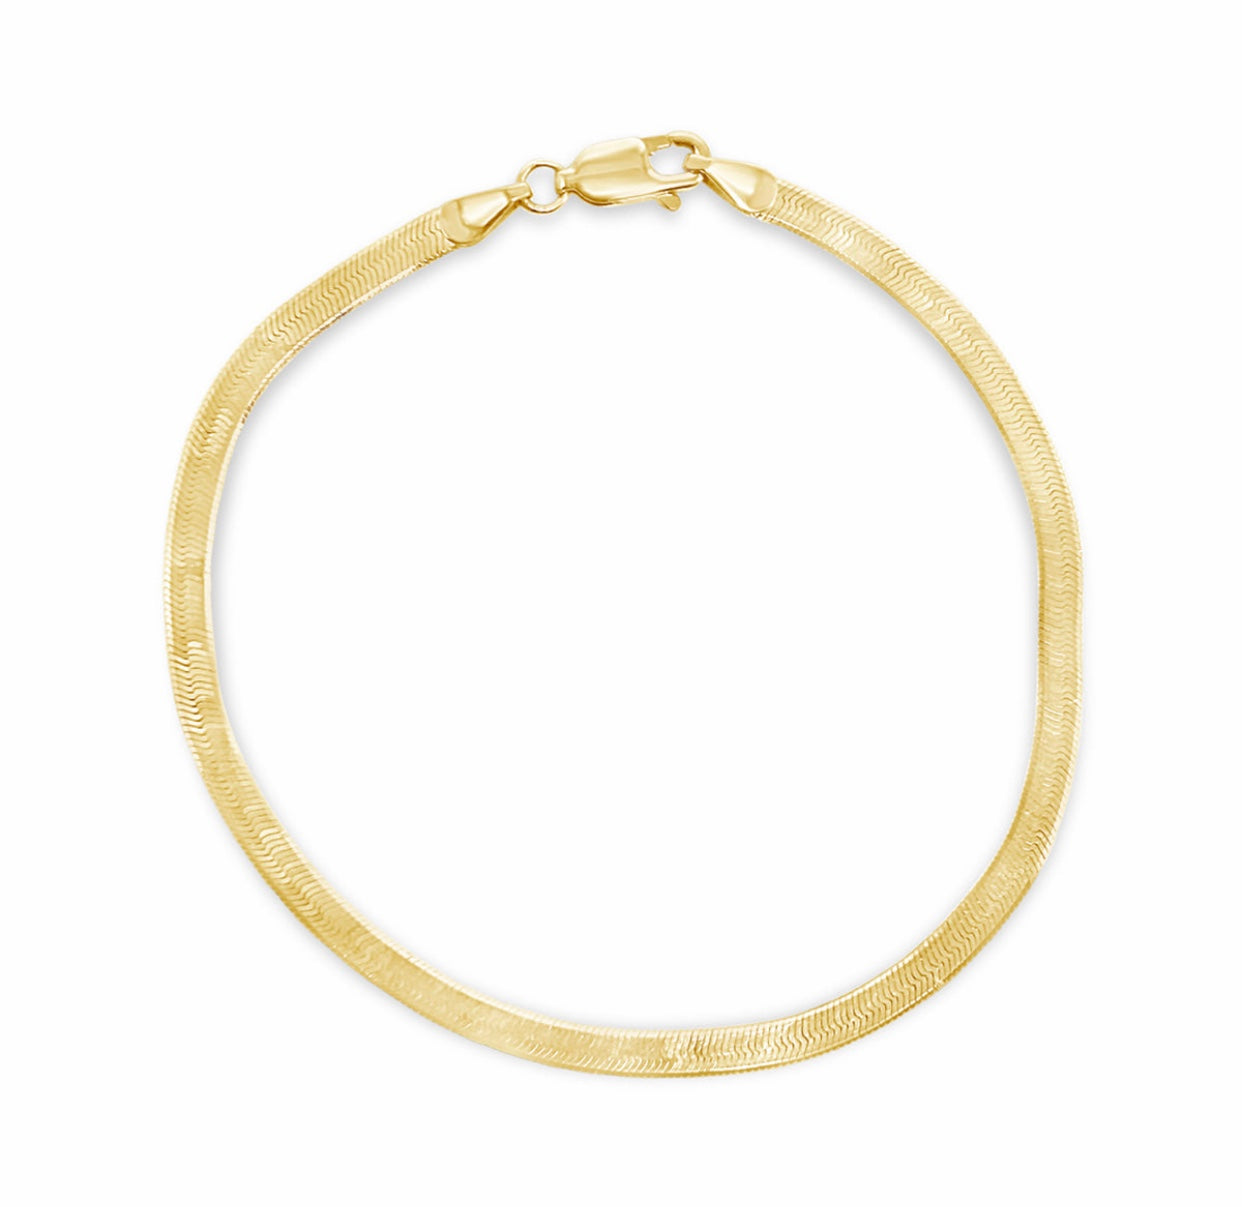 Gold plated herringbone bracelet